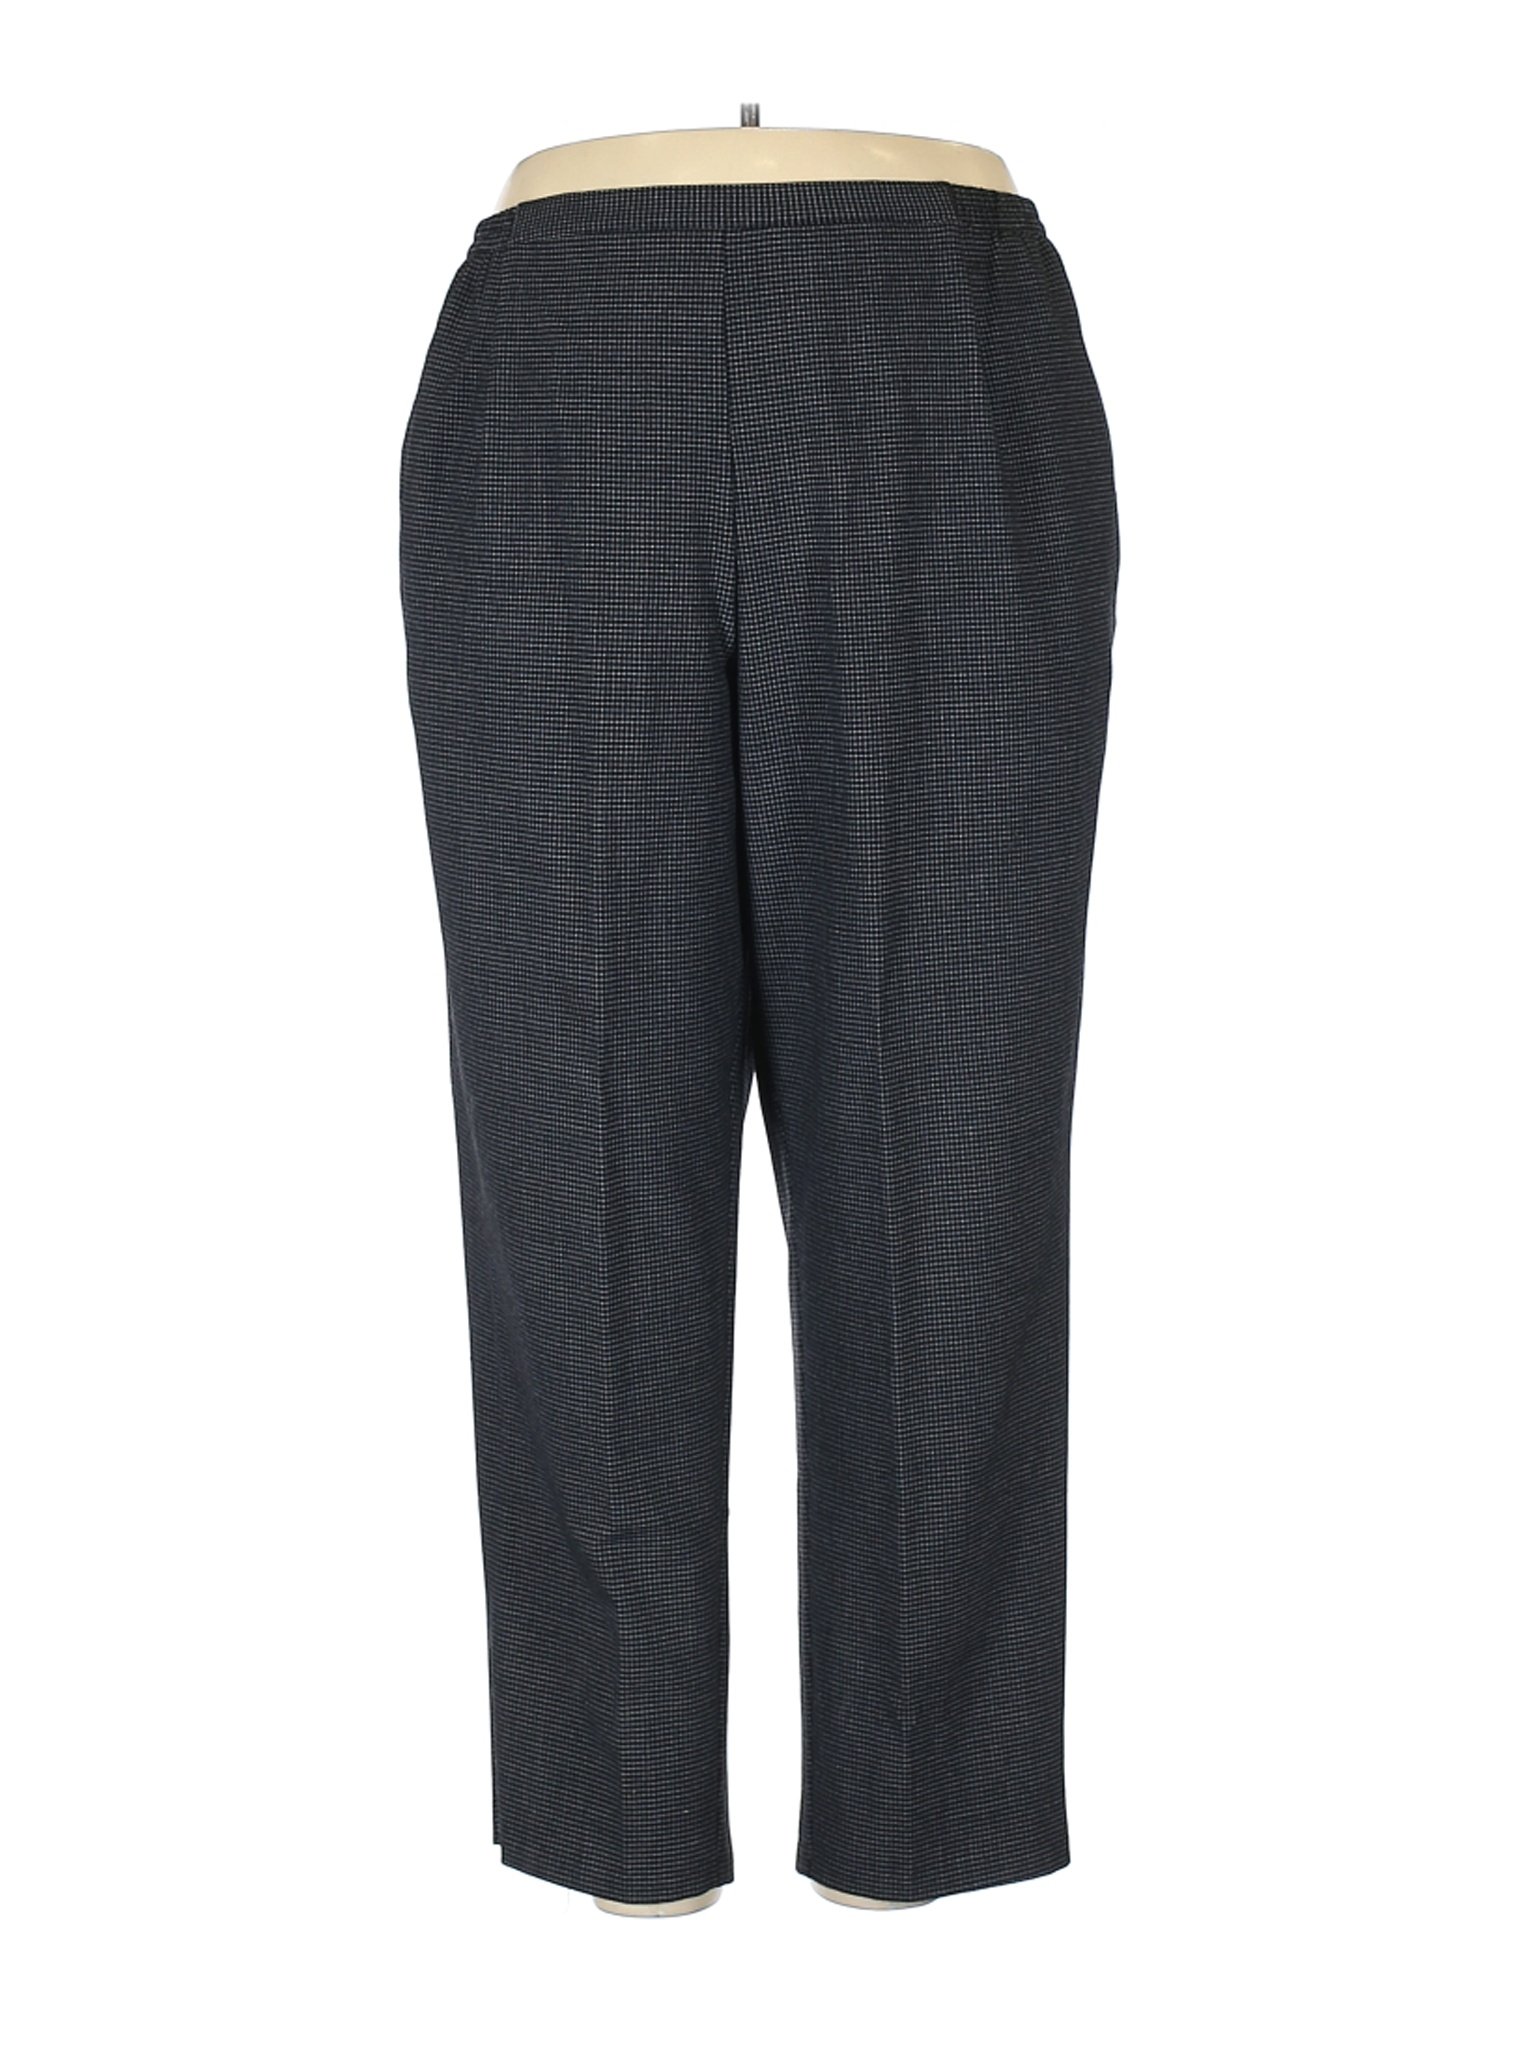 Koret Women Black Casual Pants 20 Plus | eBay